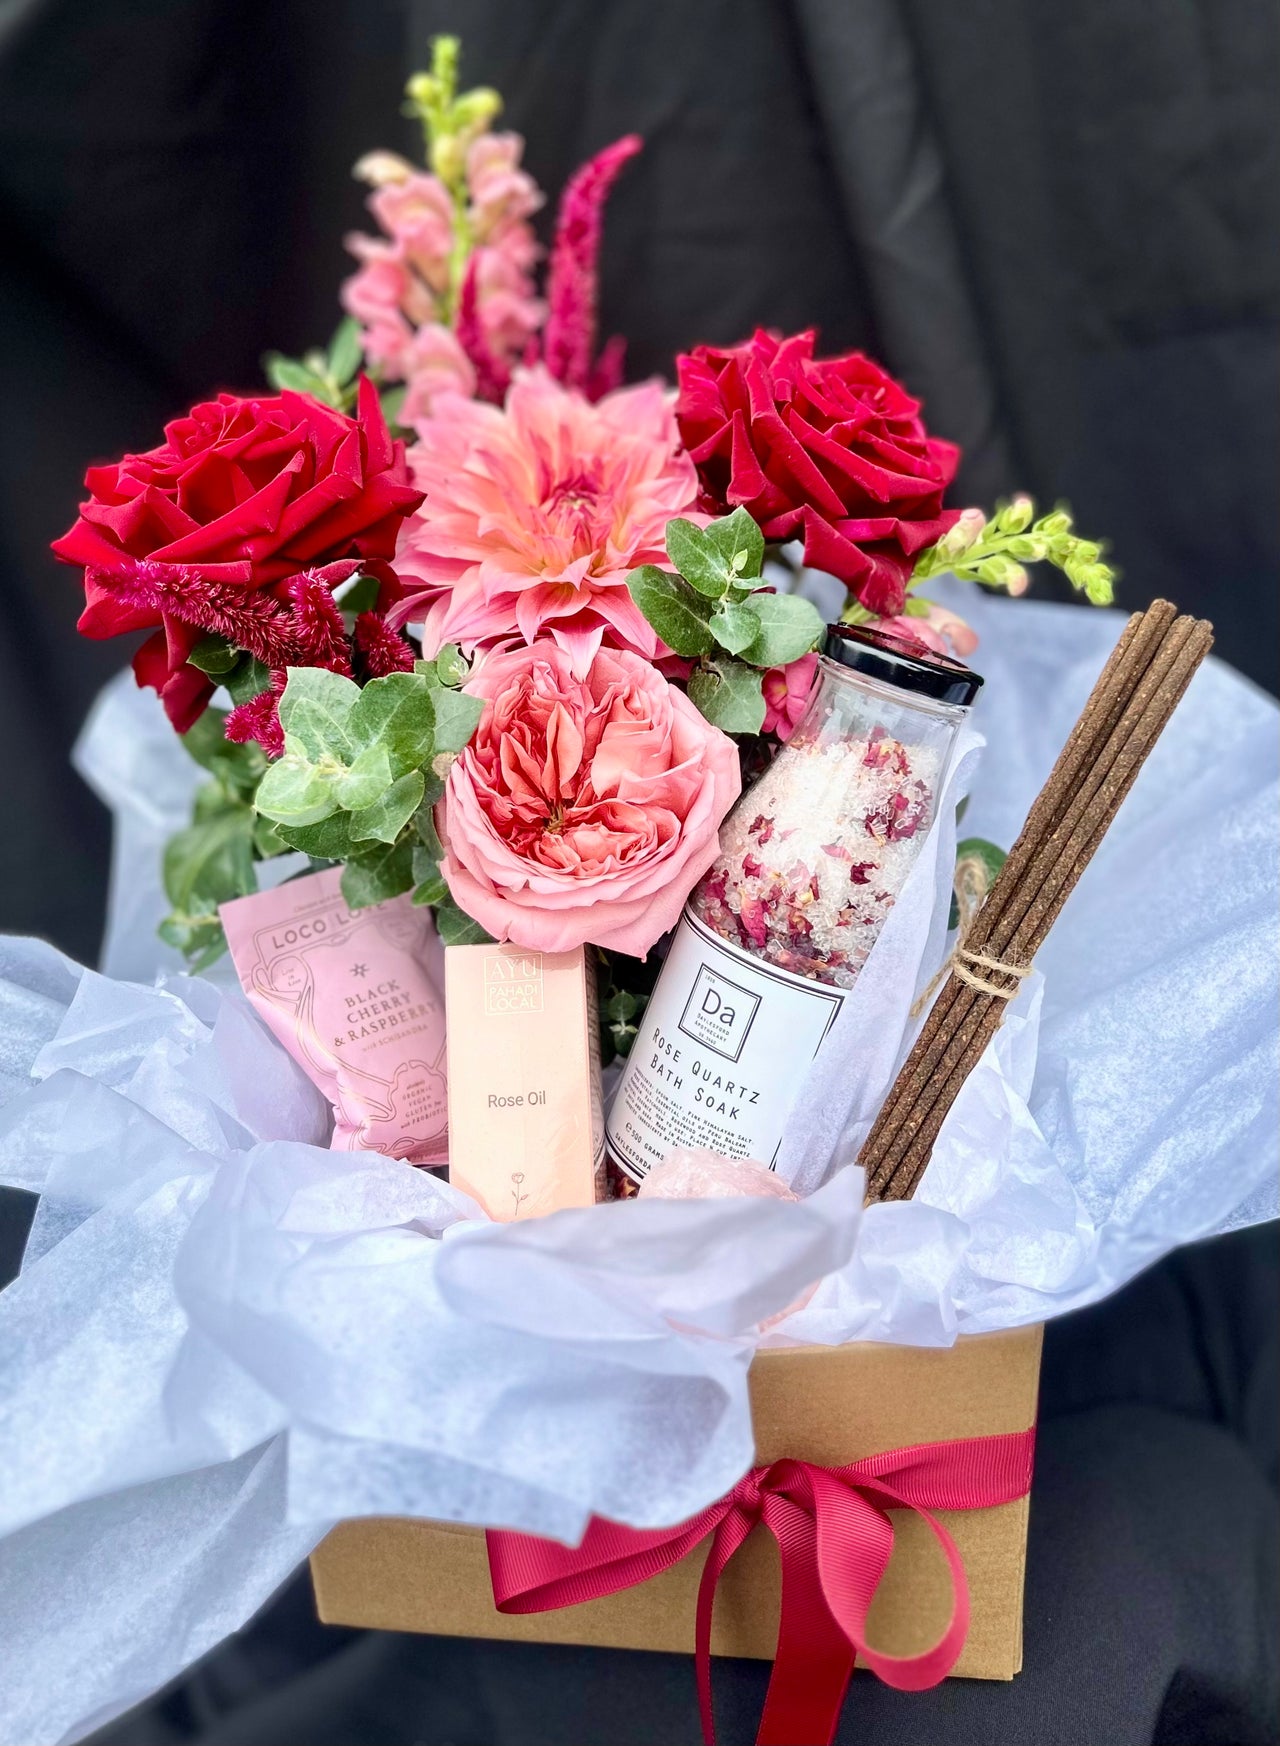 The Goddess Gift box - Haven Botanical - Ayu Rose oil - Loco Love Chocolate